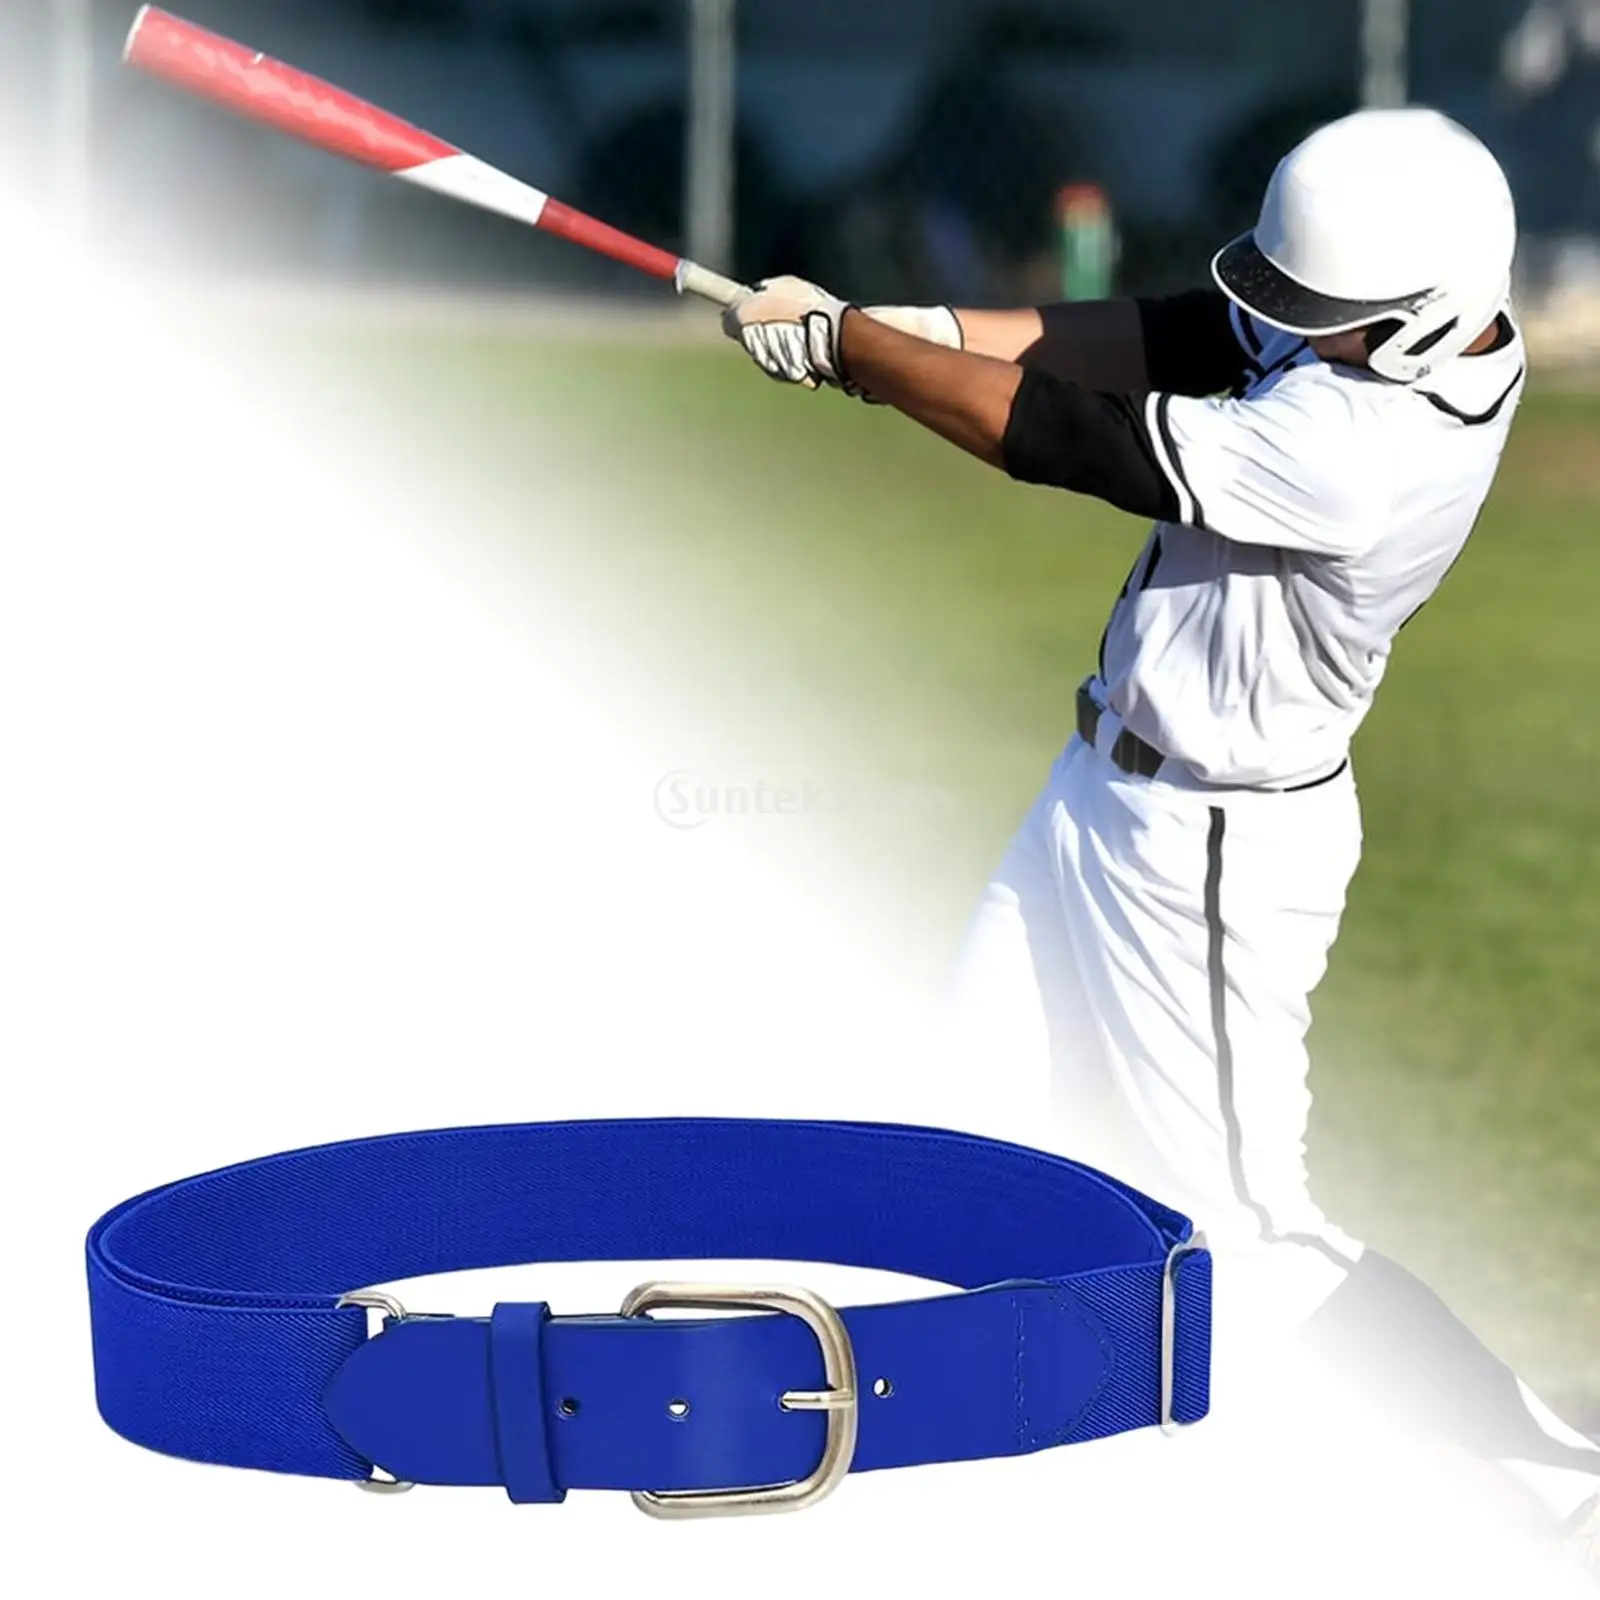 Baseball Belt Softball Belt Waist Belt Elastic Durable Comfortable to Wear Dry Adjustable Unisex Waist Band Equipment